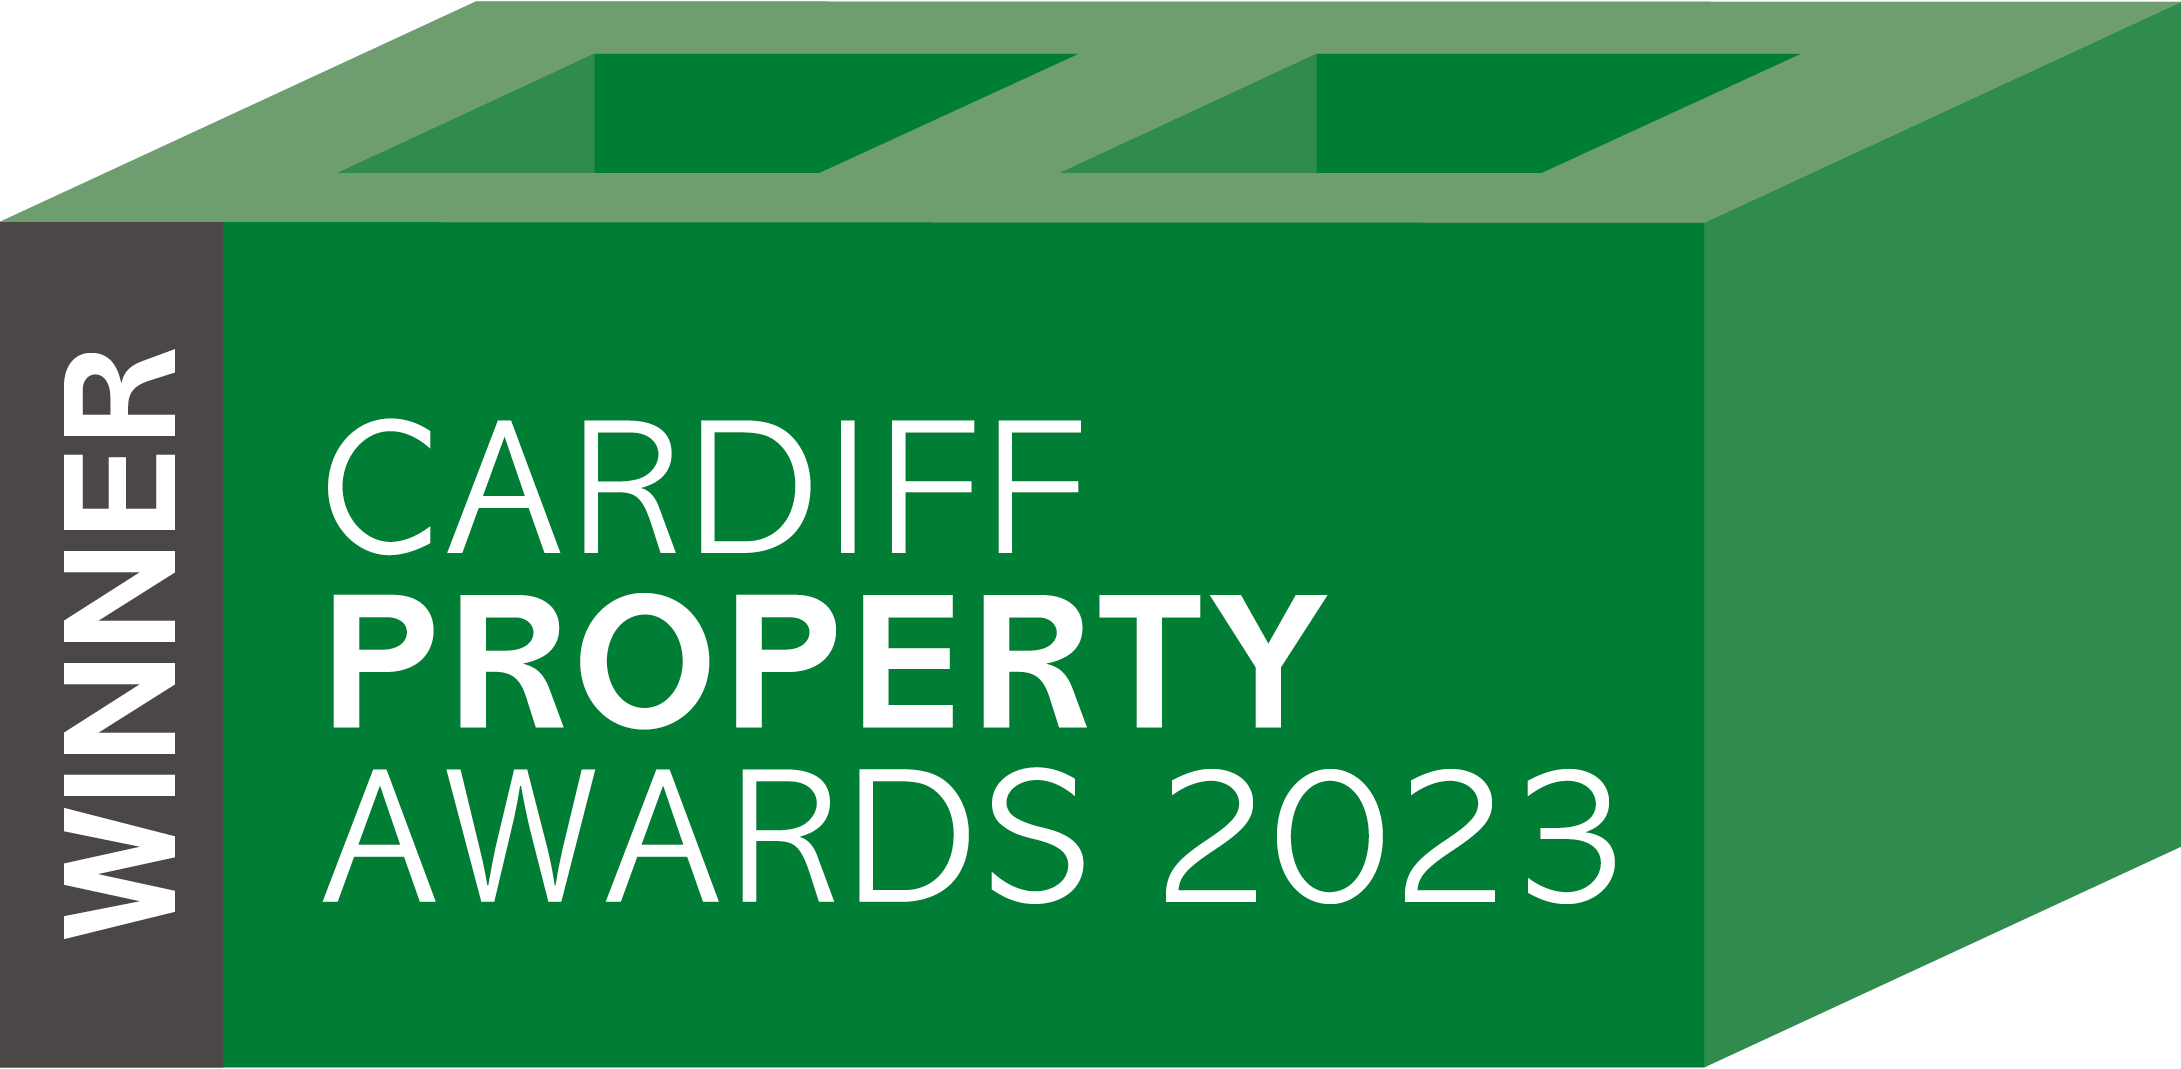 Cardiff Property Awards short video